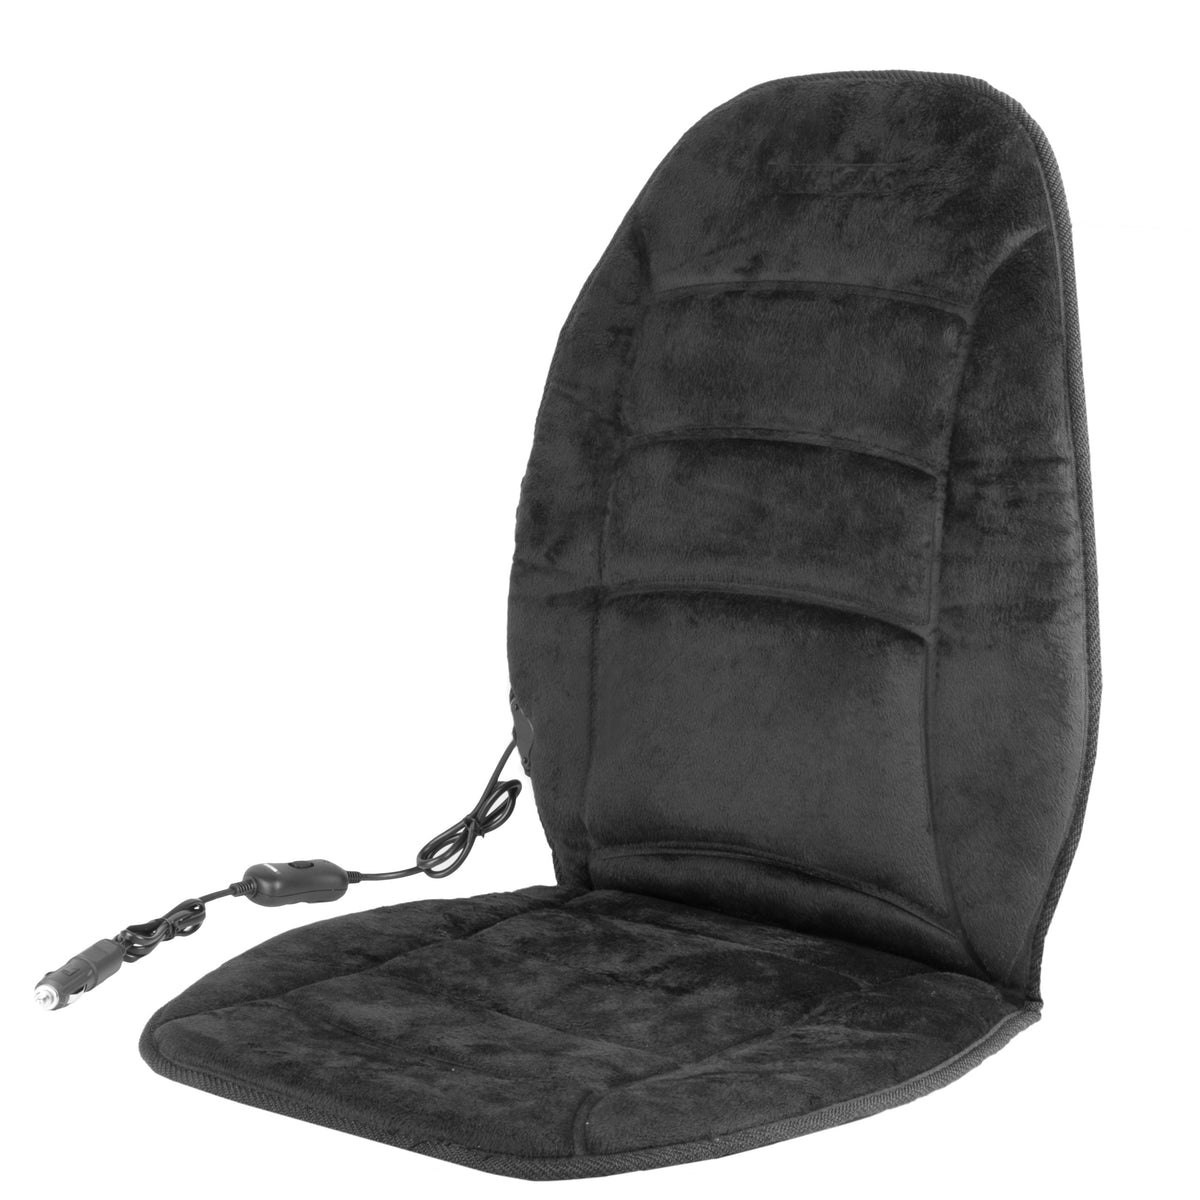 Soft Velour Heated Seat Cushion, Comfort, Wagan Healthmate